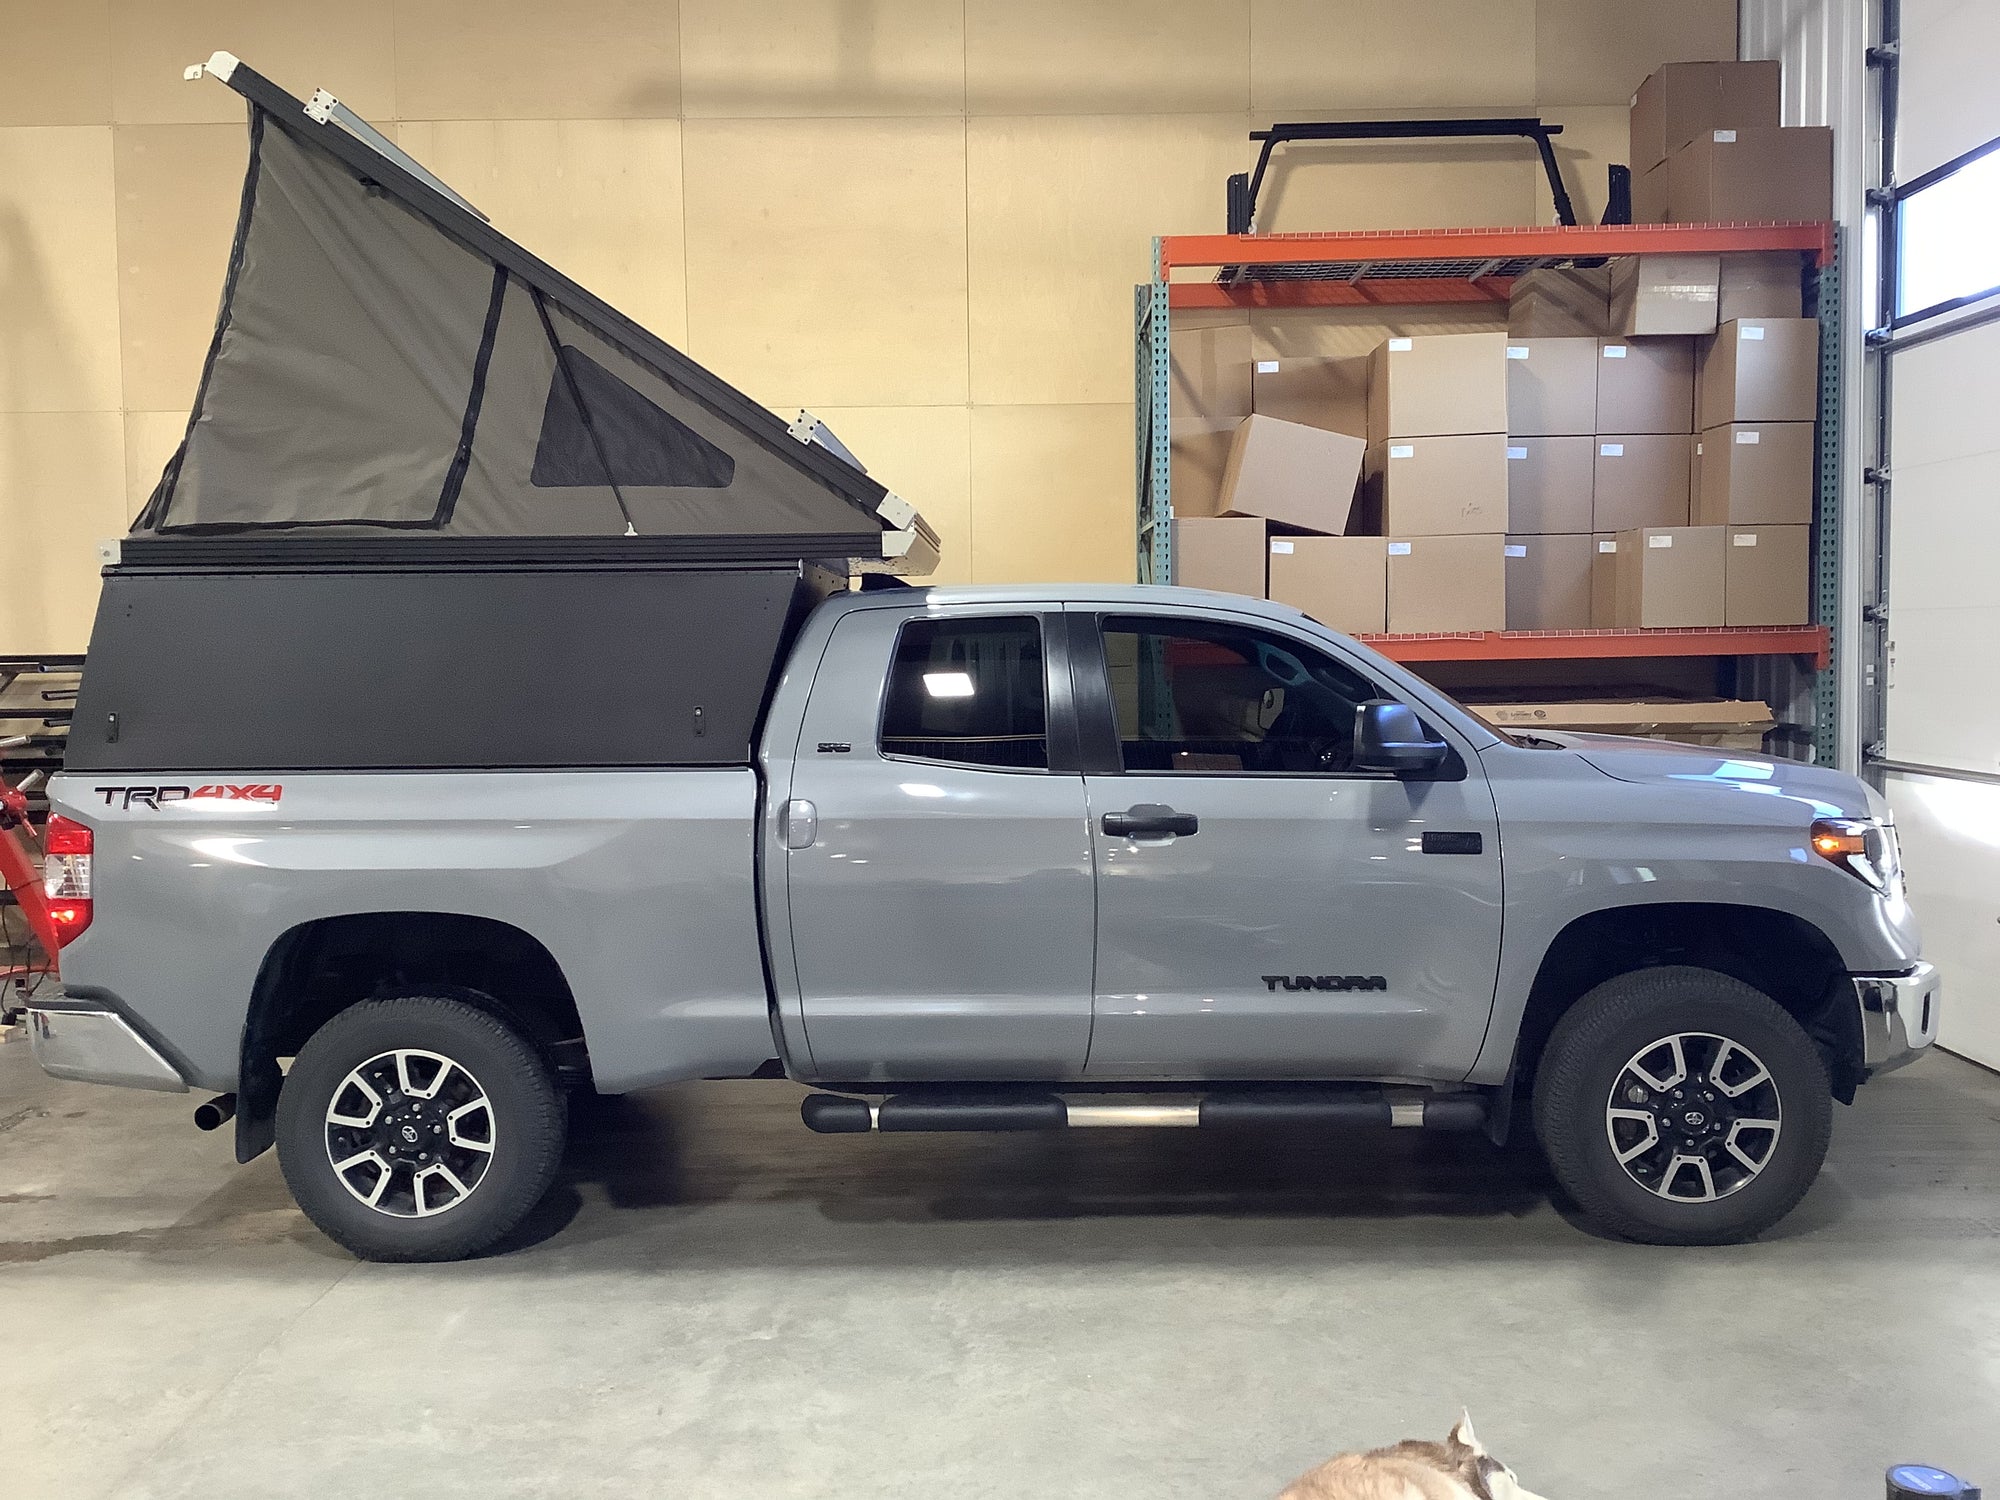 2020 Toyota Tundra Camper - Build #3648